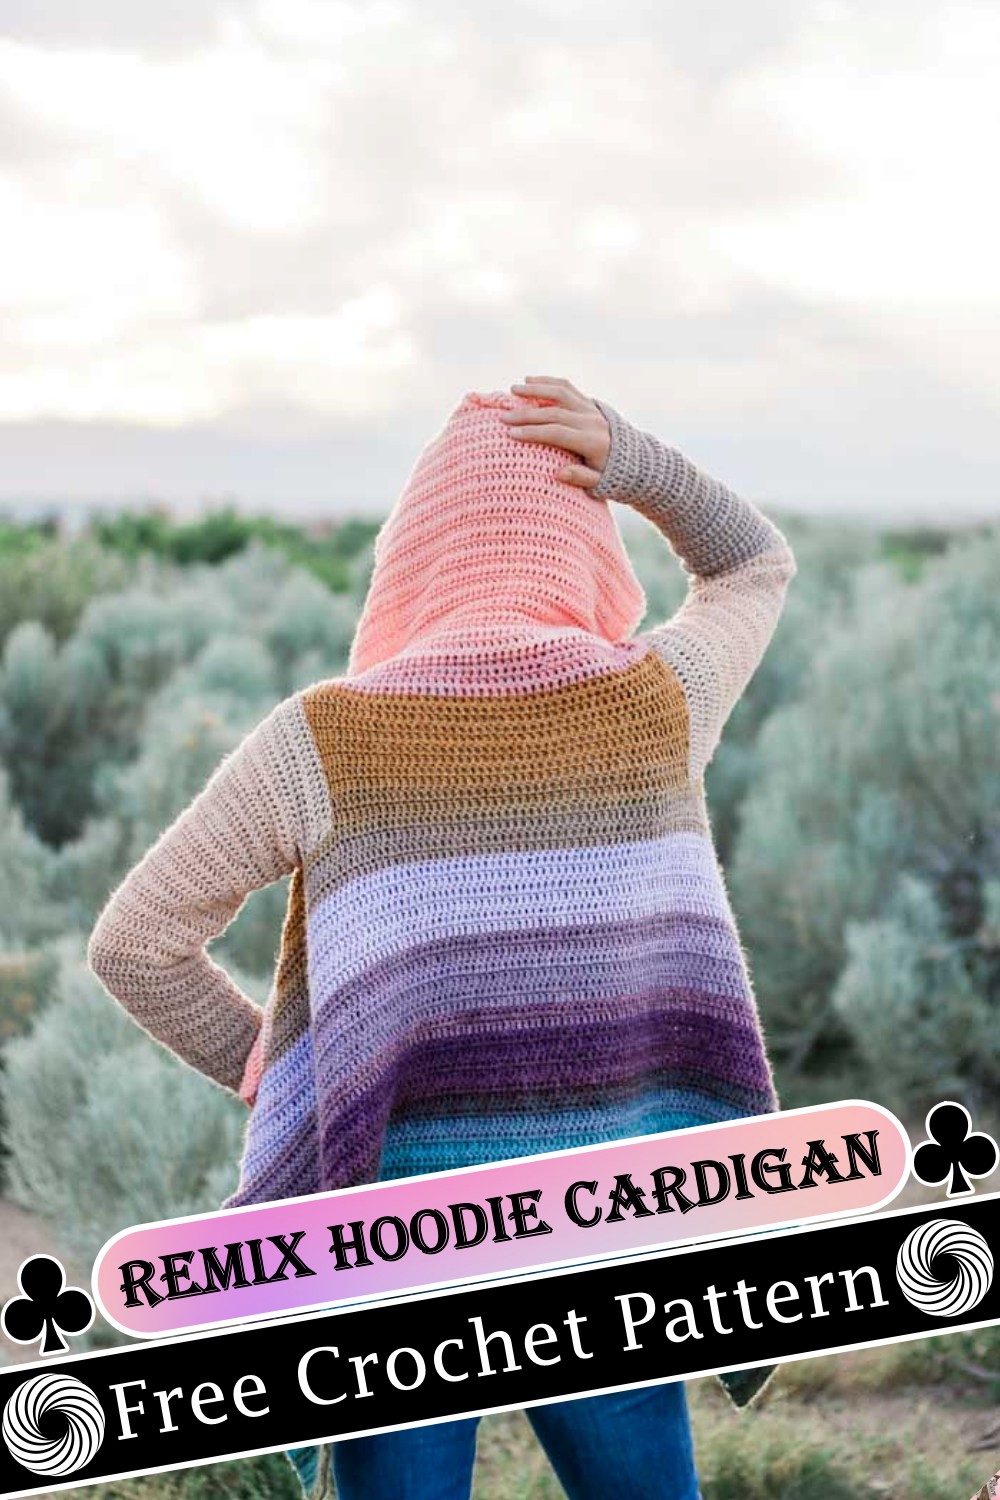 Remix Hoodie Cardigan